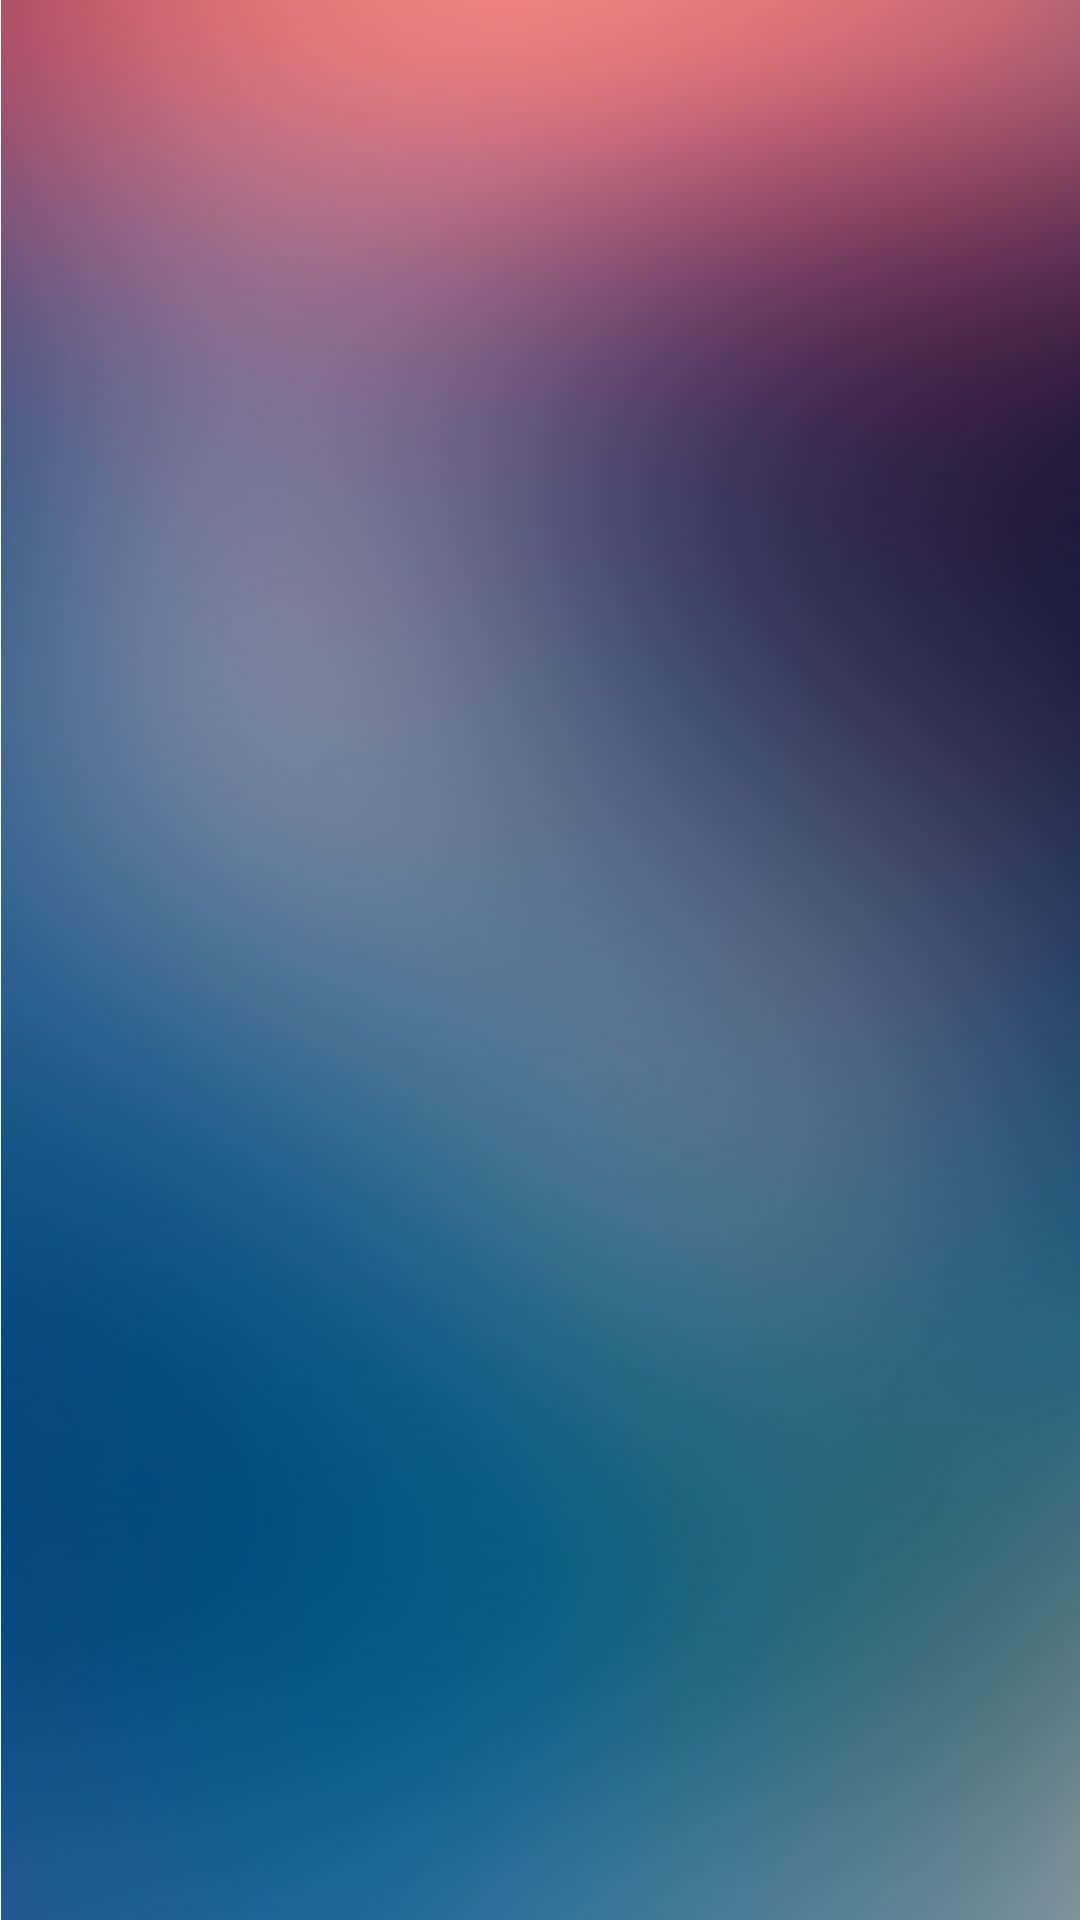 Bunteverlaufsfarben Iphone Wallpaper